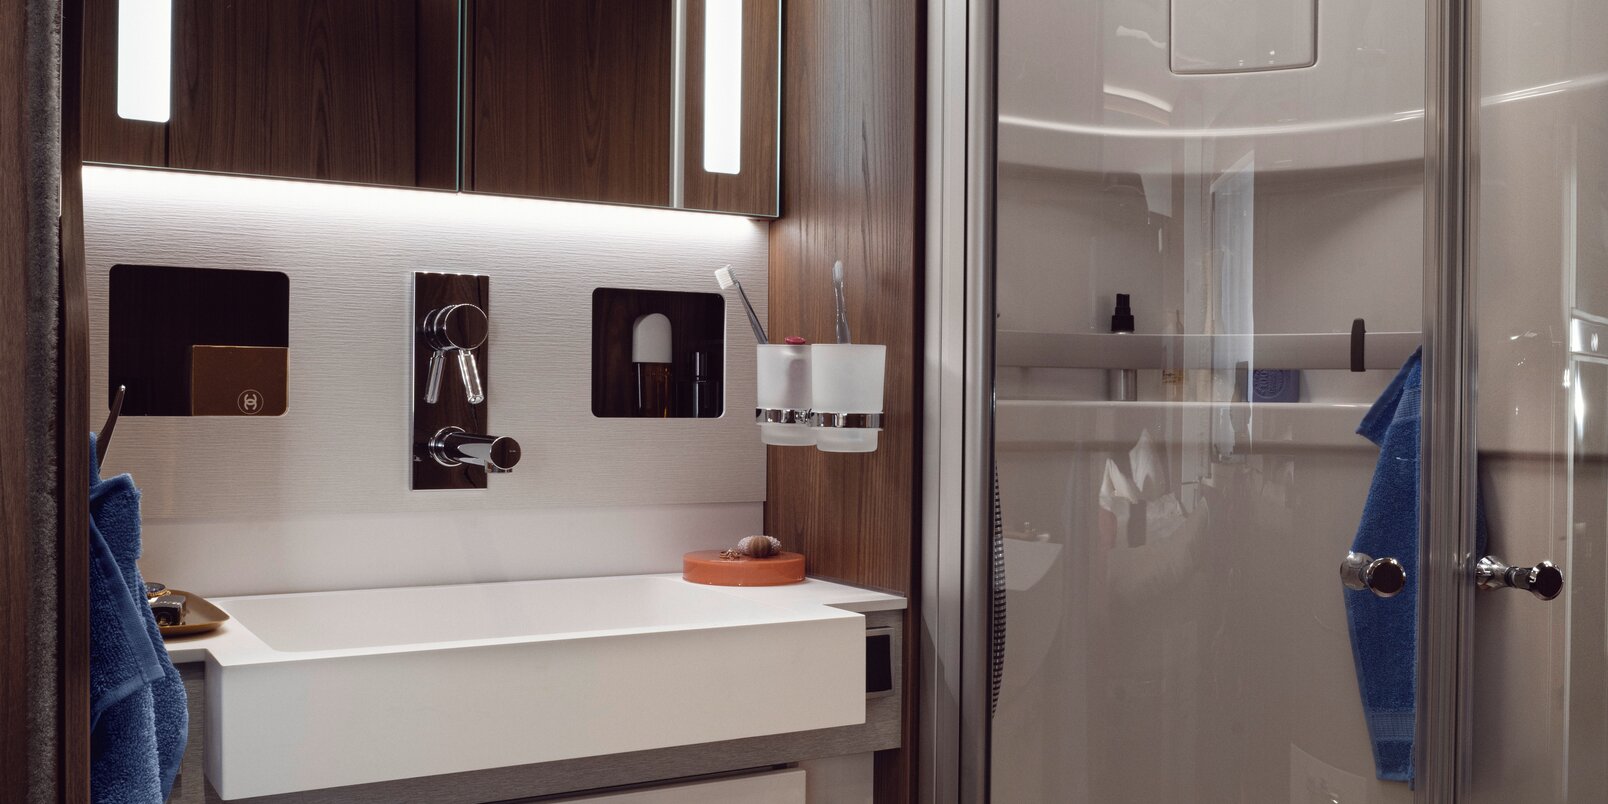 Salonbadkamer in de HYMER B-ML I 890: verlichte spiegelkast, laden onder de wastafel, aparte douche met echt glazen deuren